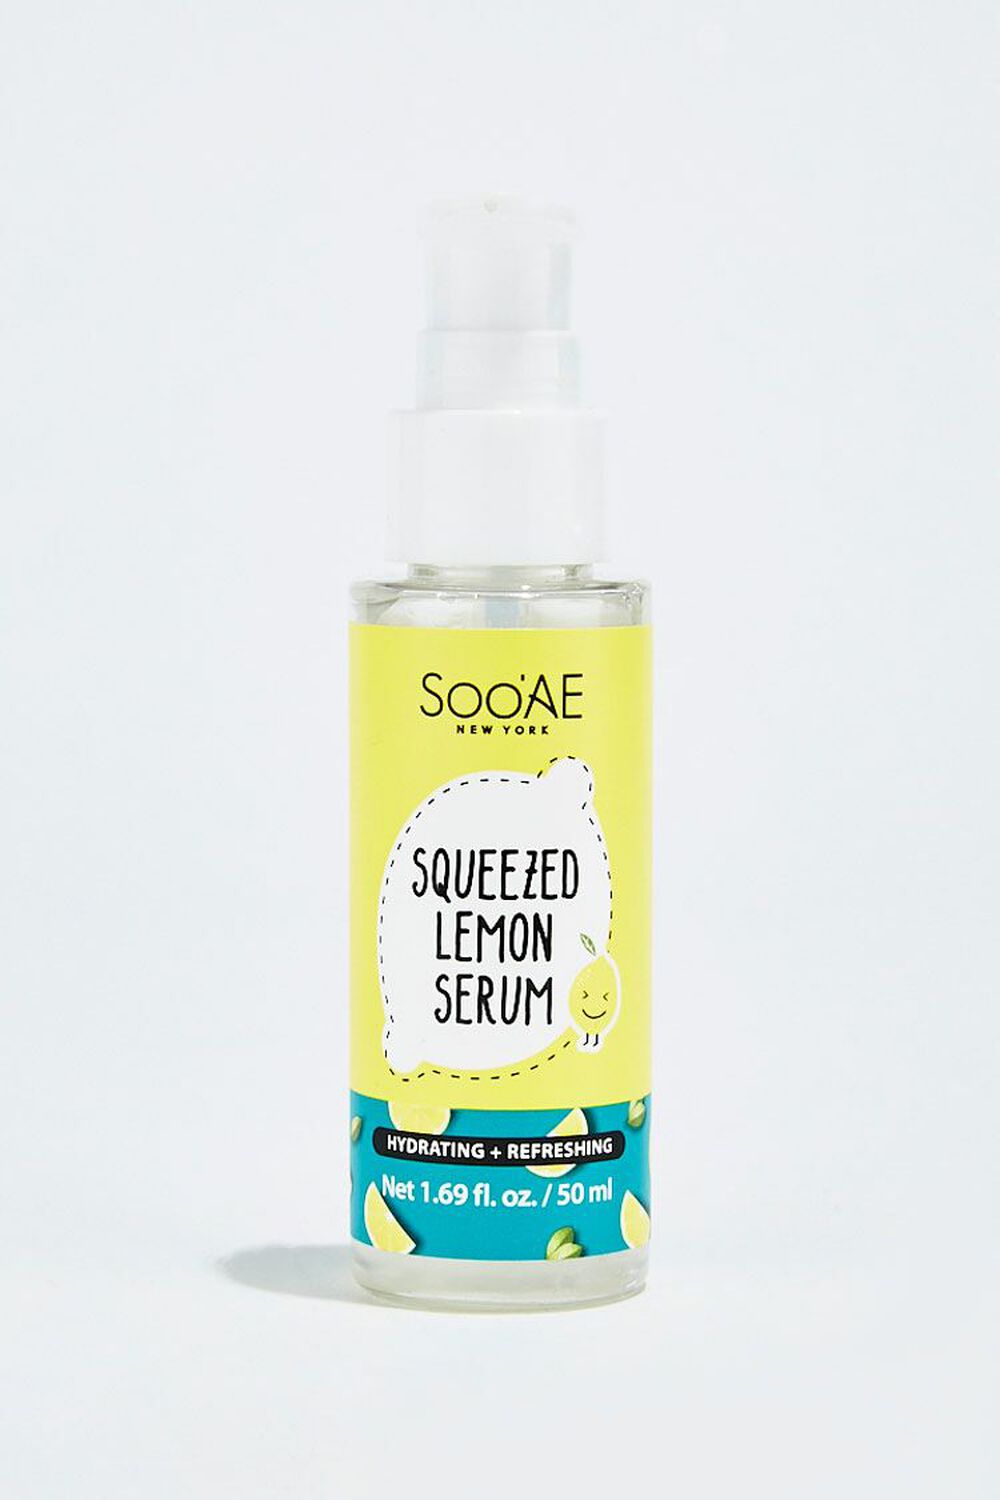 YELLOW SooAE Squeezed Lemon Serum, image 1